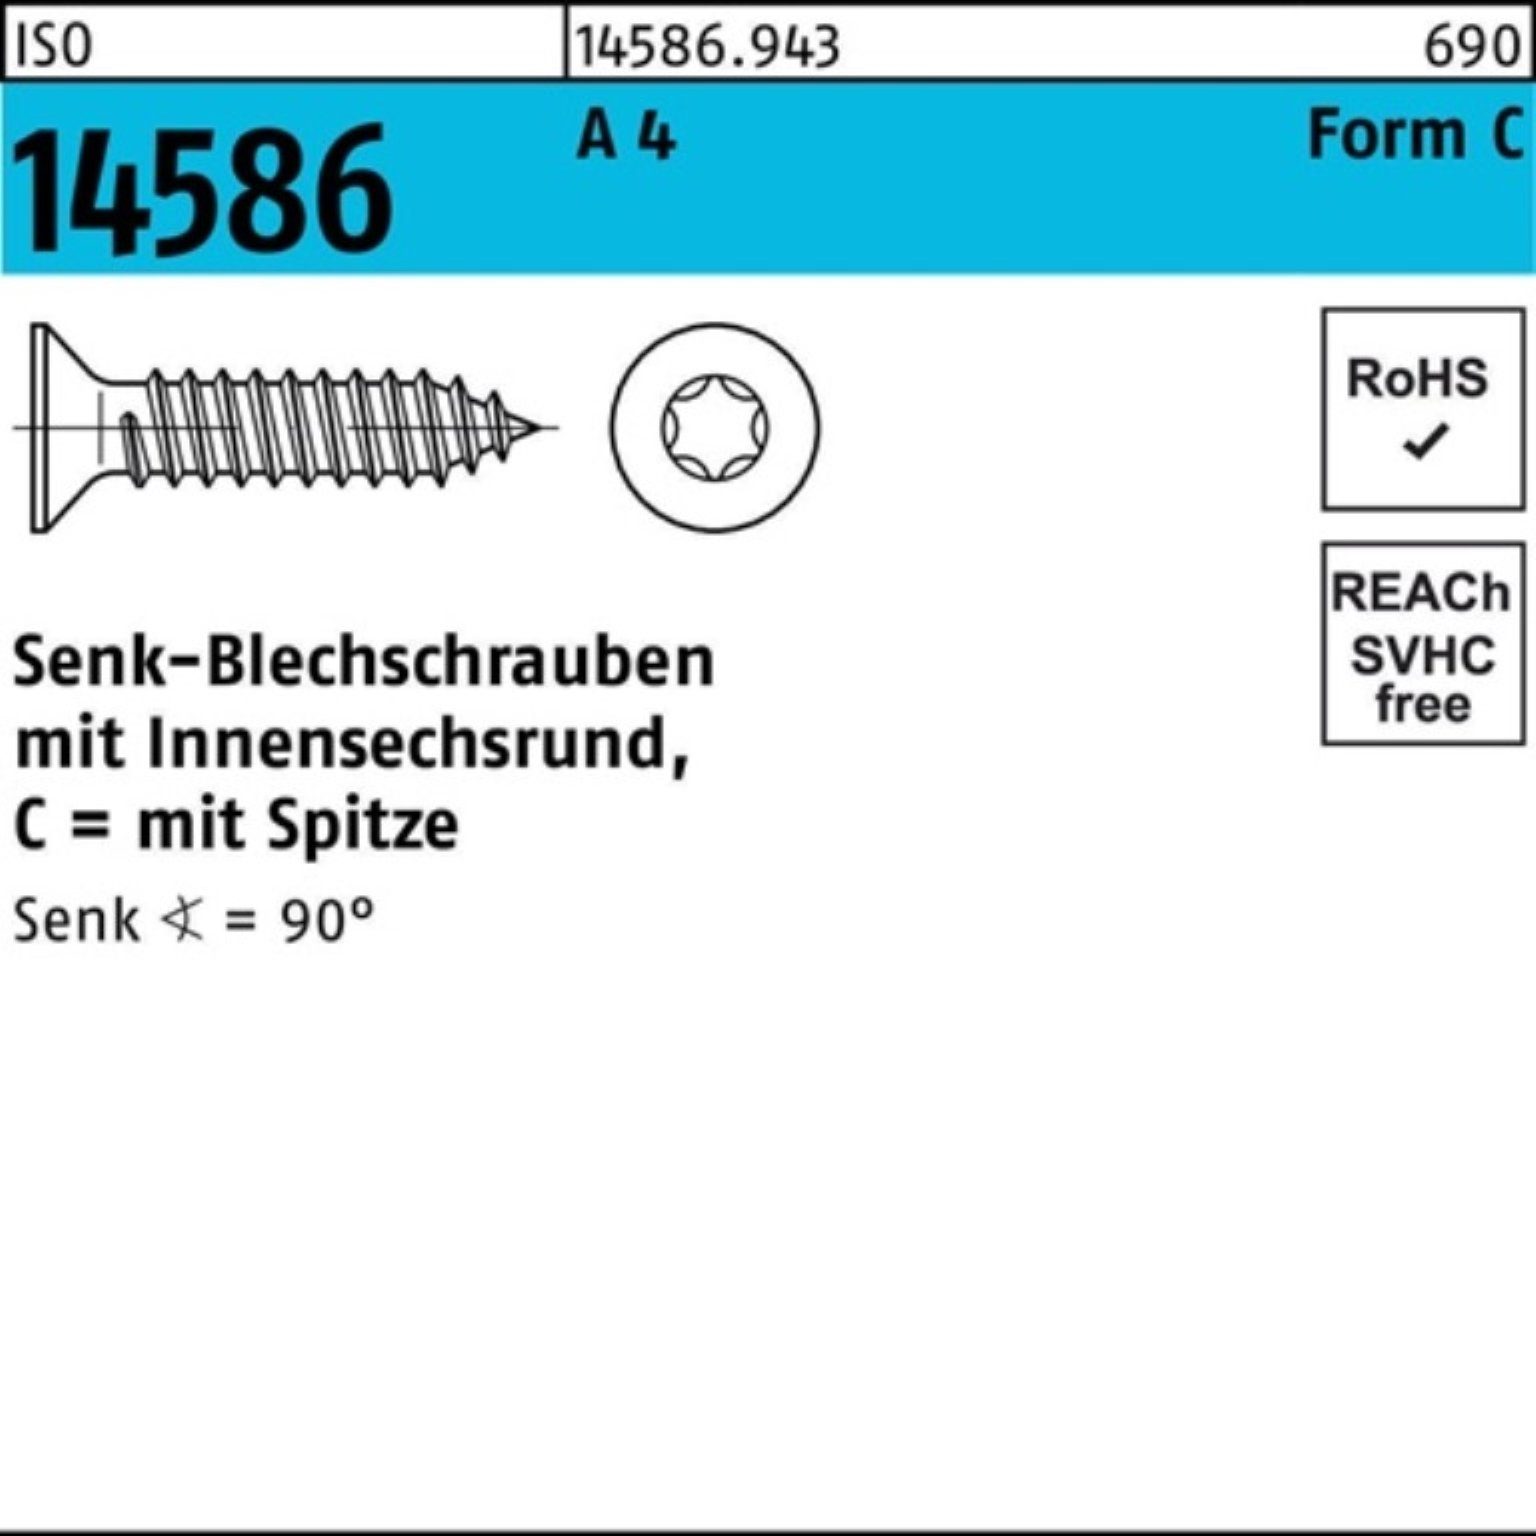 Reyher Schraube 500er Pack Senkblechschraube ISO 14586 ISR/Spitze 4,2x 45-T20 A 4 500 | Schrauben